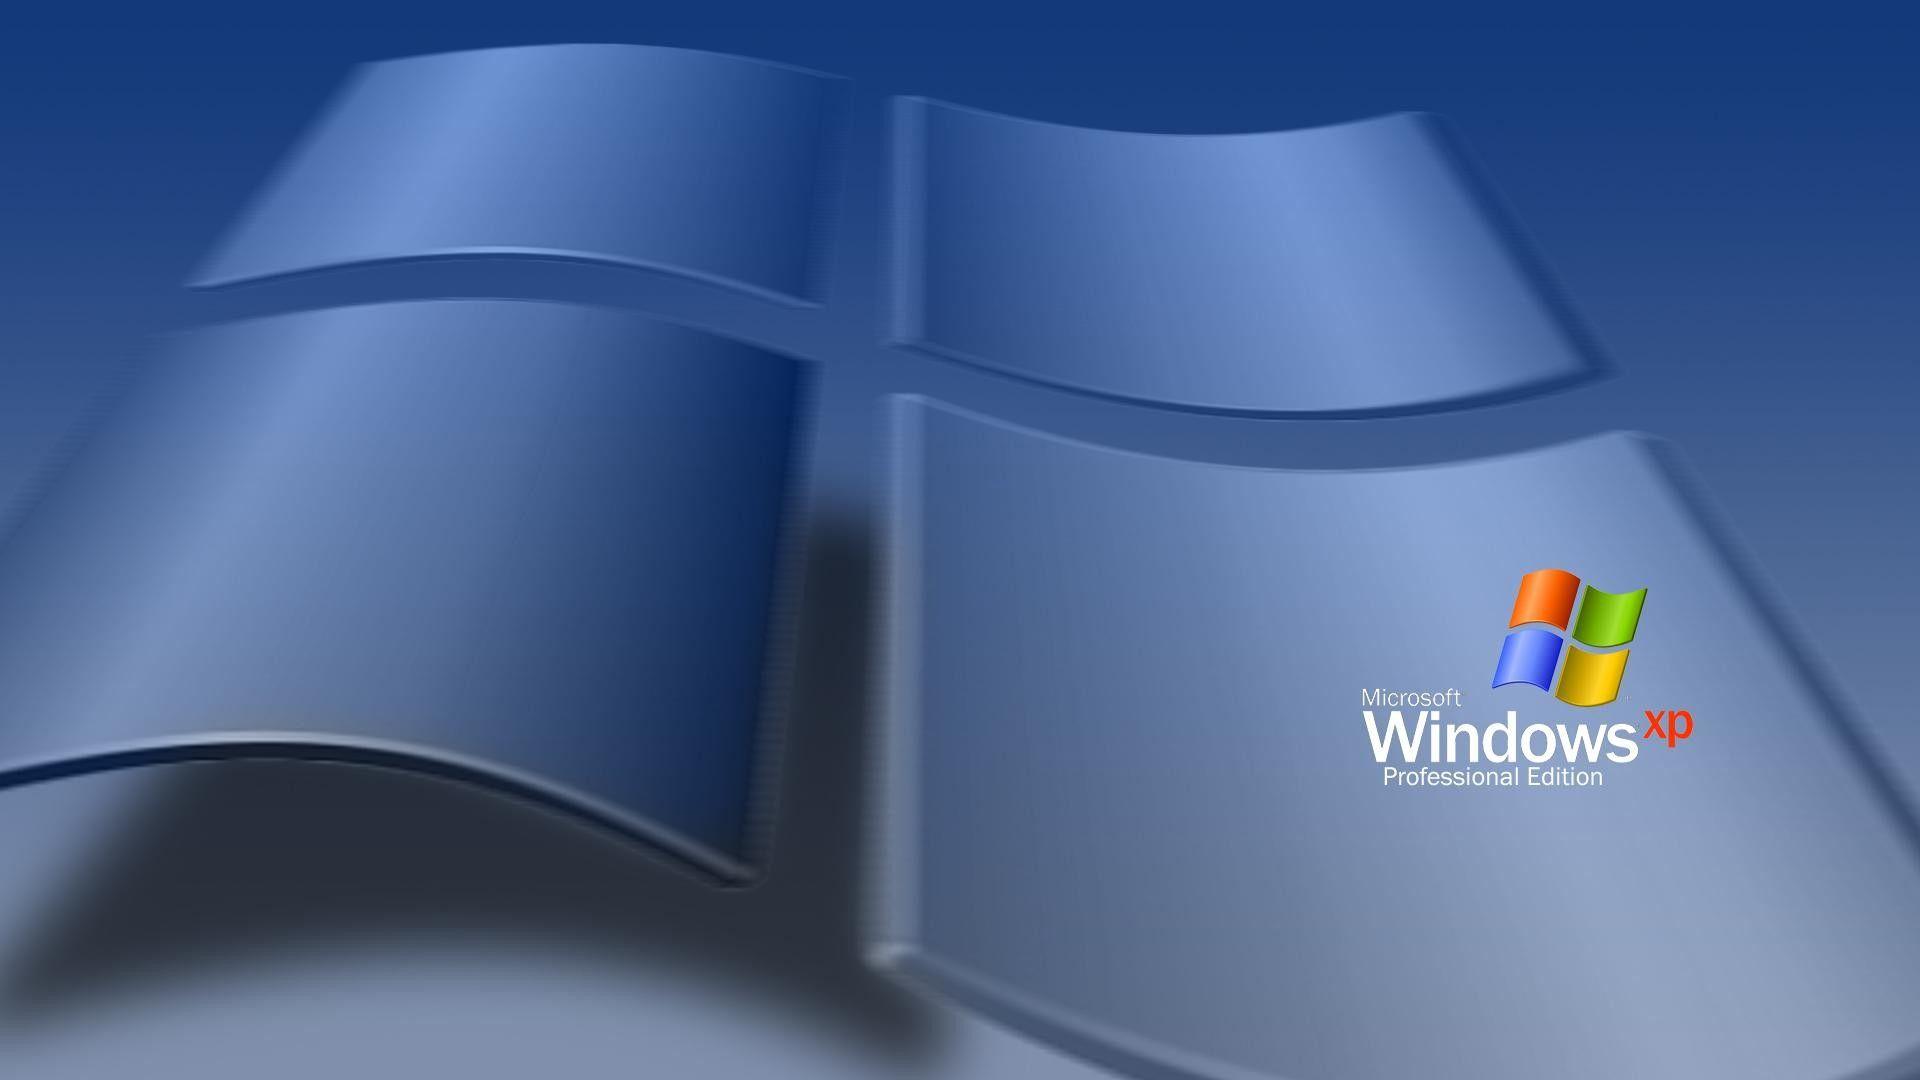 Windows 2000 Professional HD wallpaper  Pxfuel